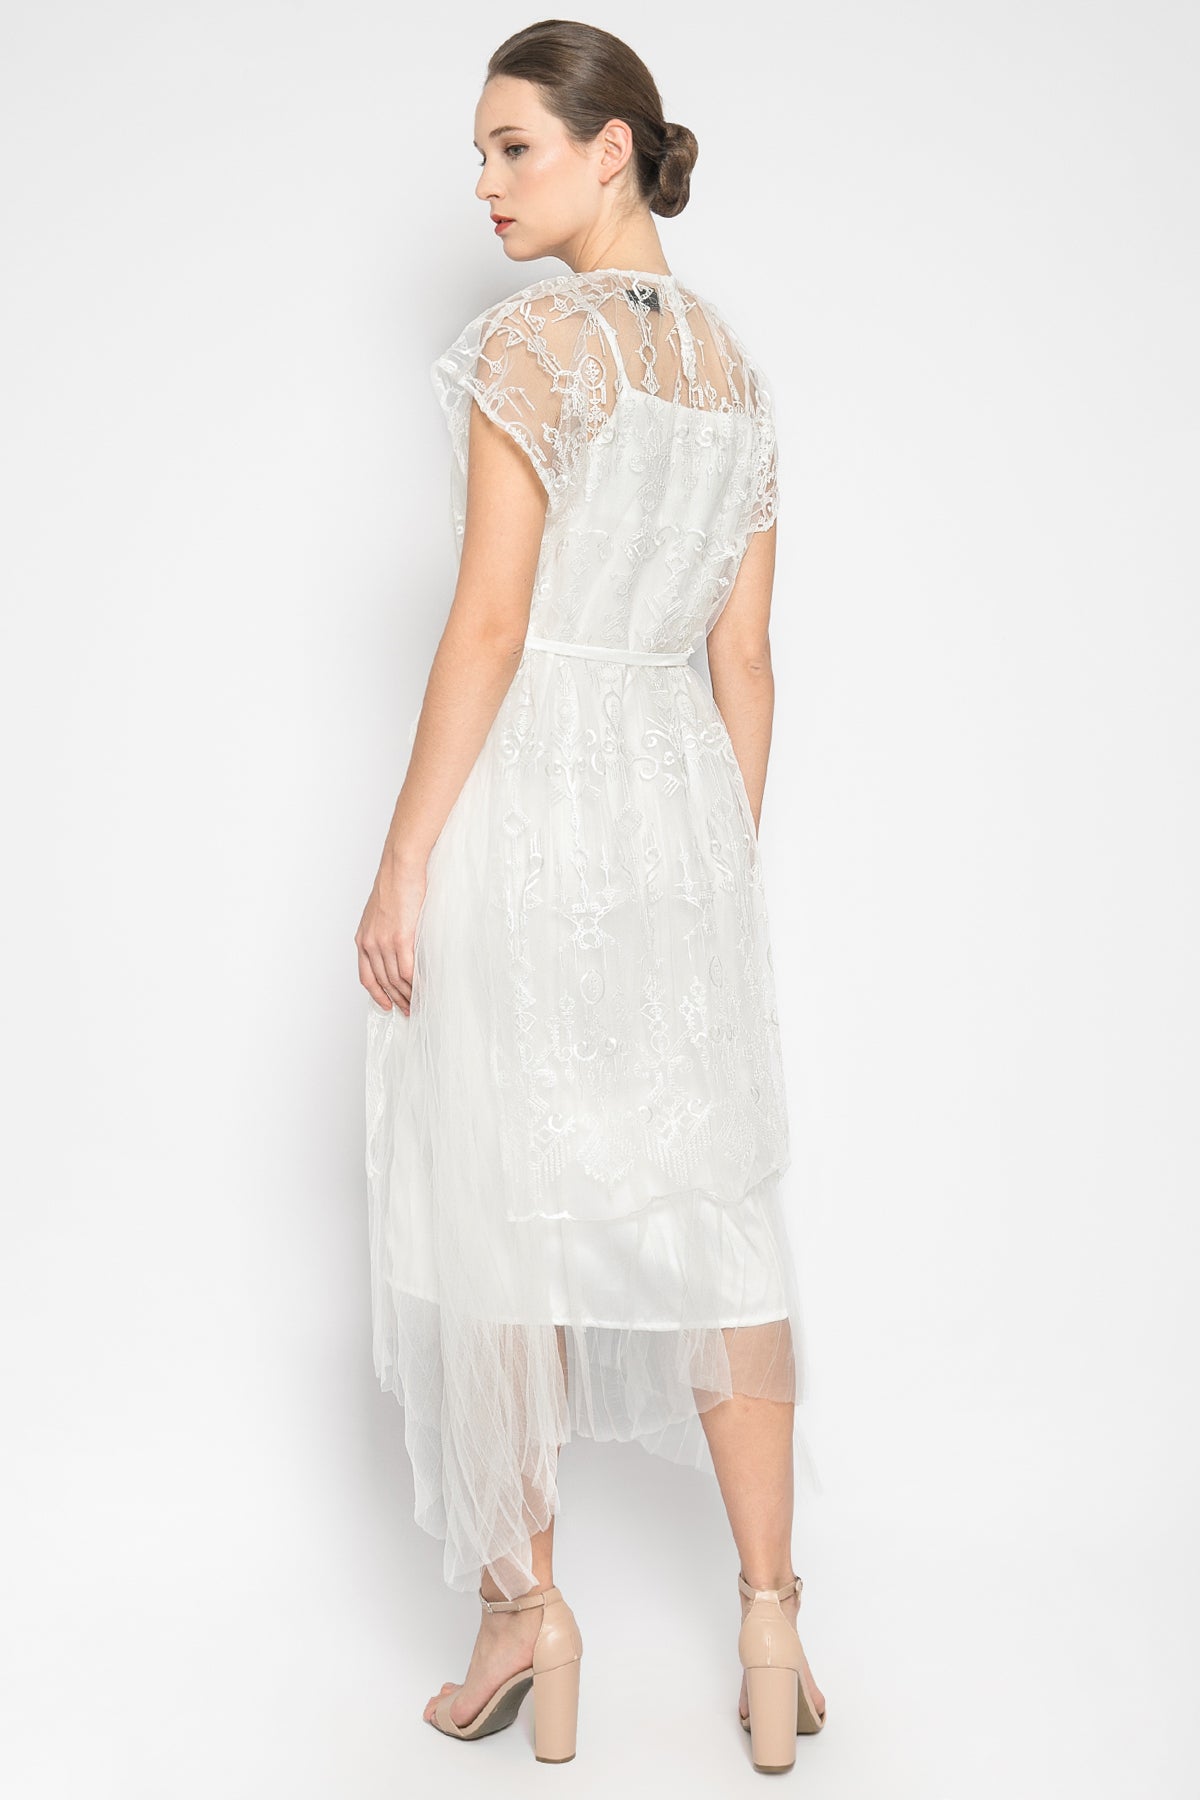 Marni Dress in Off White